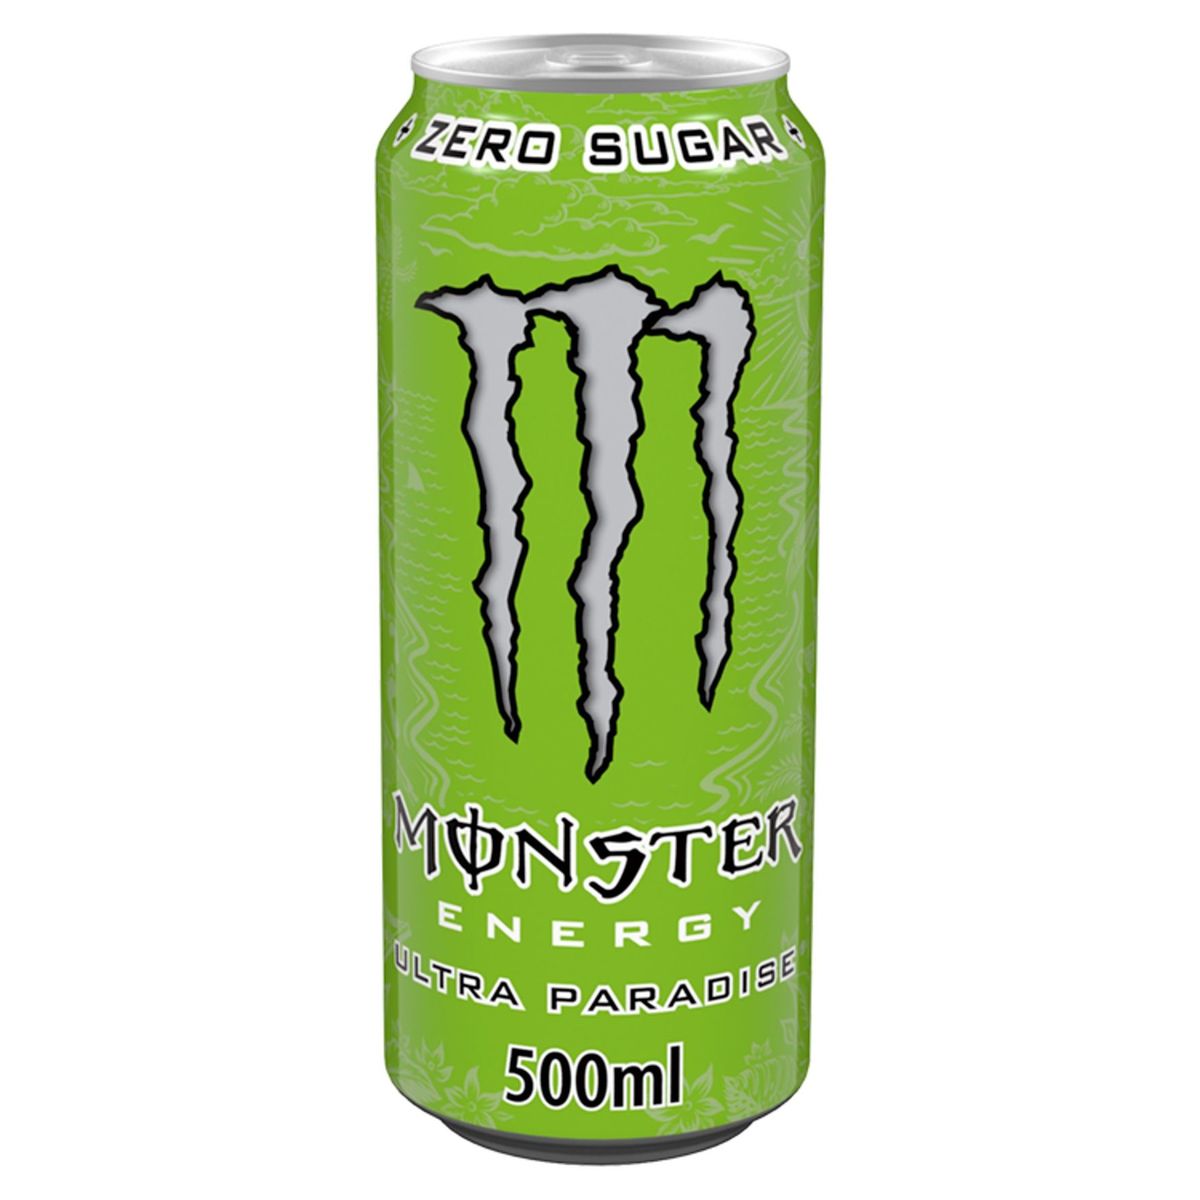 Monster Energy Zero Sugar Ultra Paradise Drink 500 ml